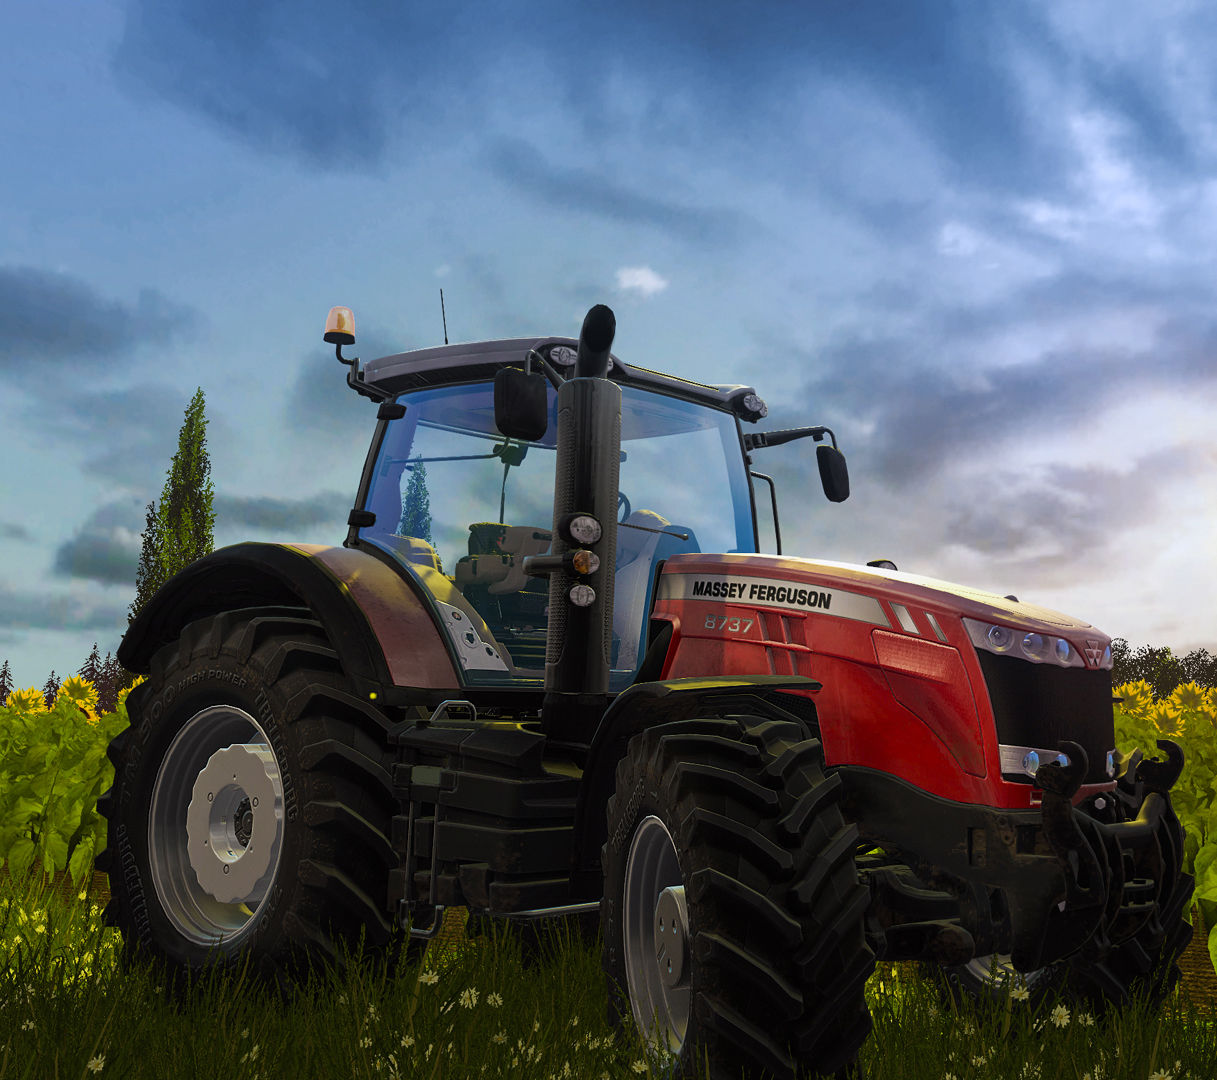 farming simulator 17 news